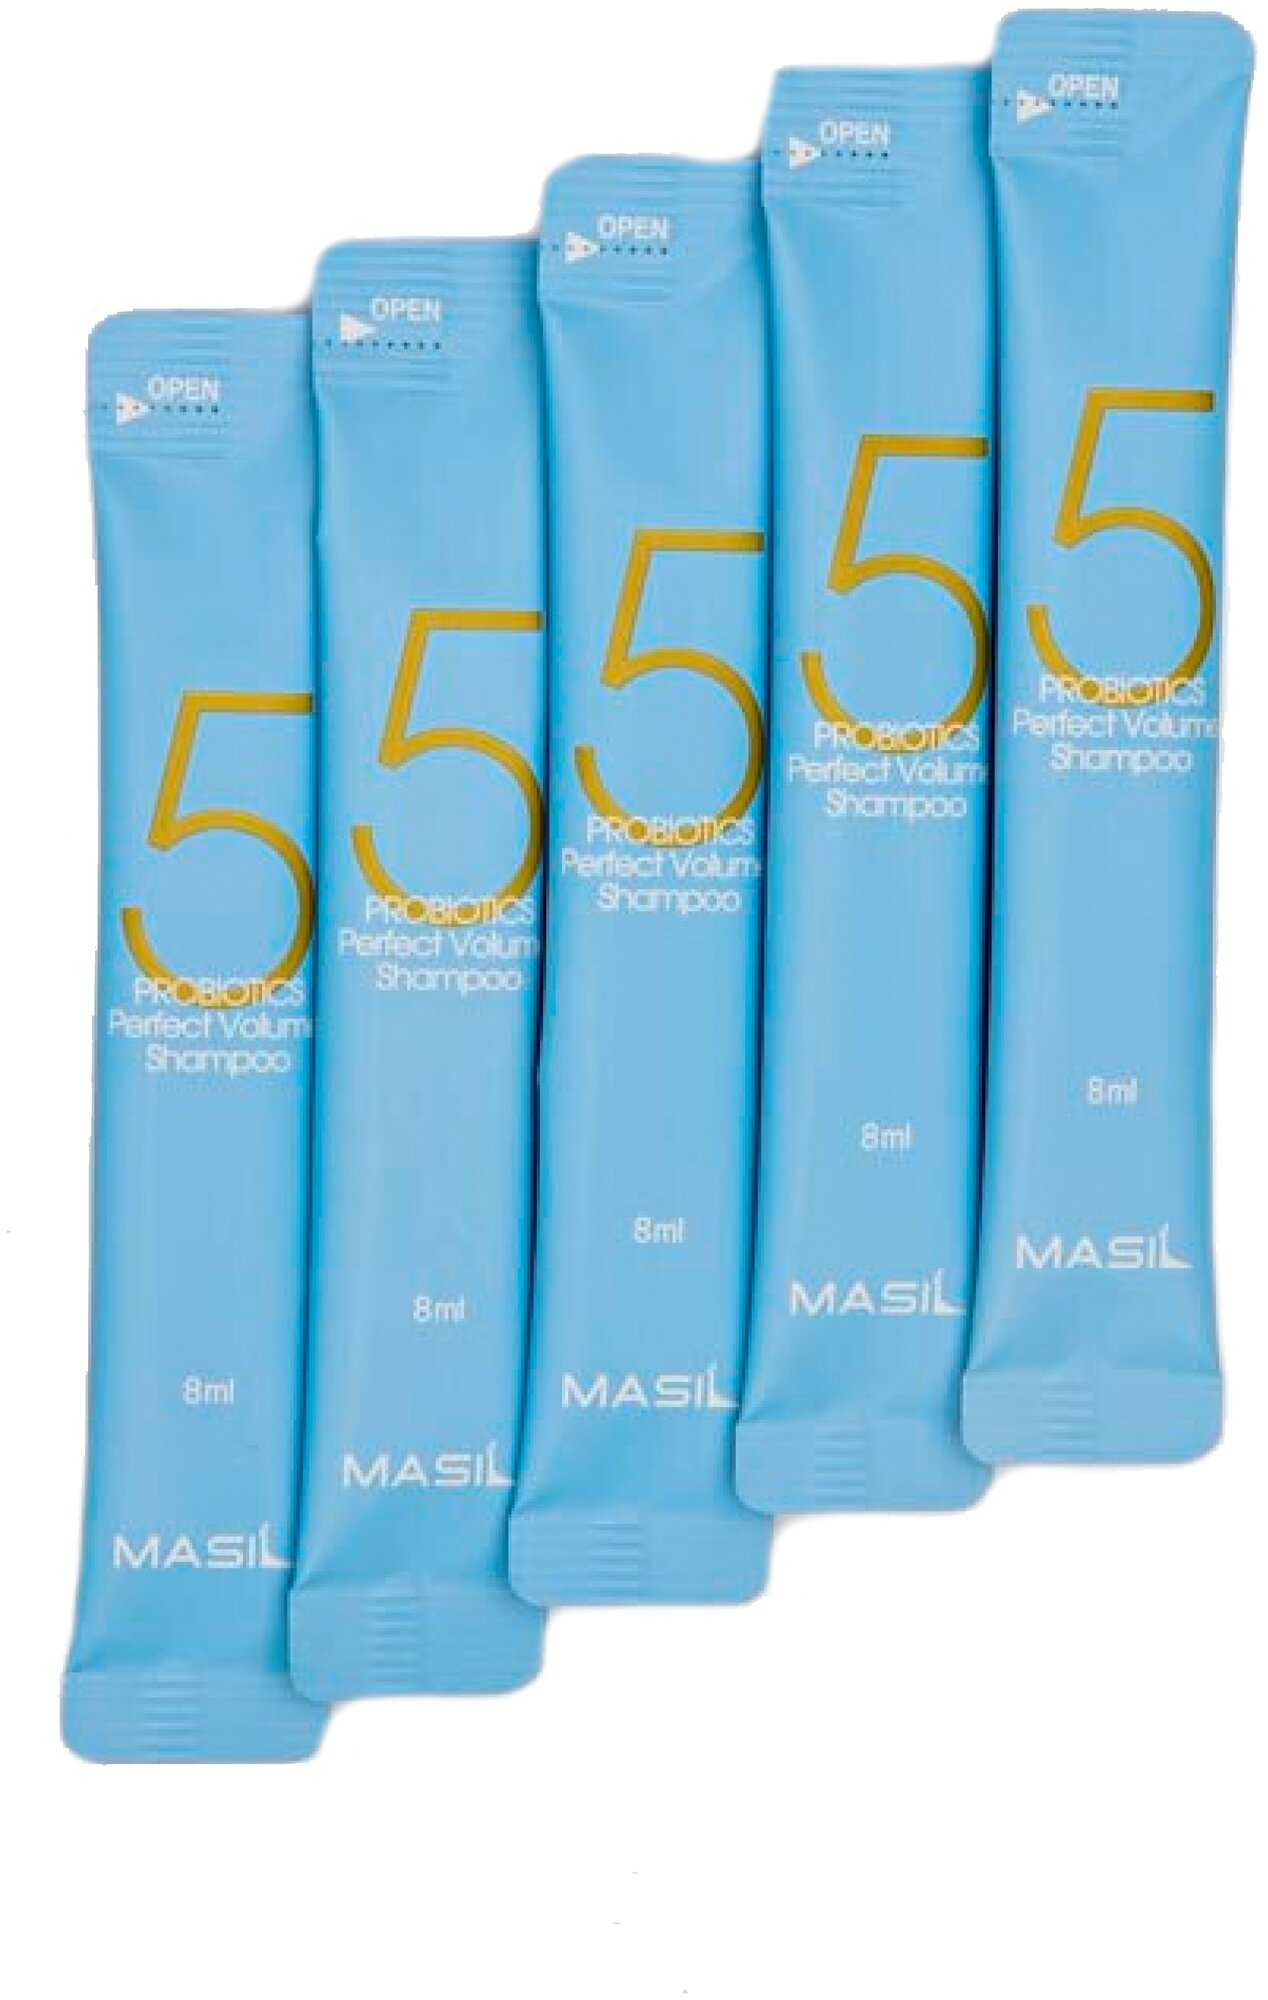 Набор шампуней для объема Masil 5 Probiotics Perfect Volume Shampoo ( 5 шт)